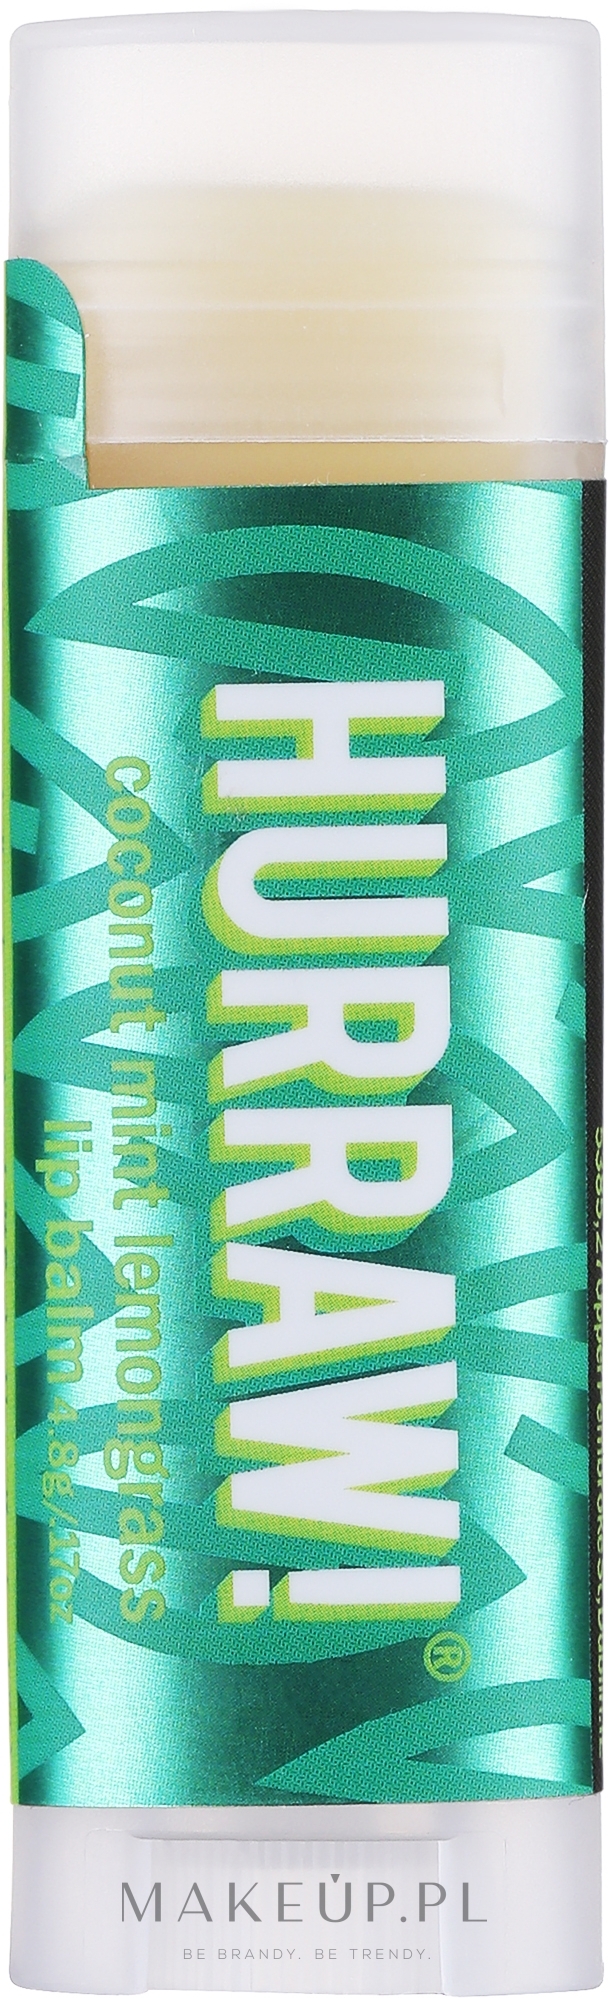 Balsam do ust Pitta - Hurraw! Pitta Lip Balm Limited Edition — Zdjęcie 4.8 g